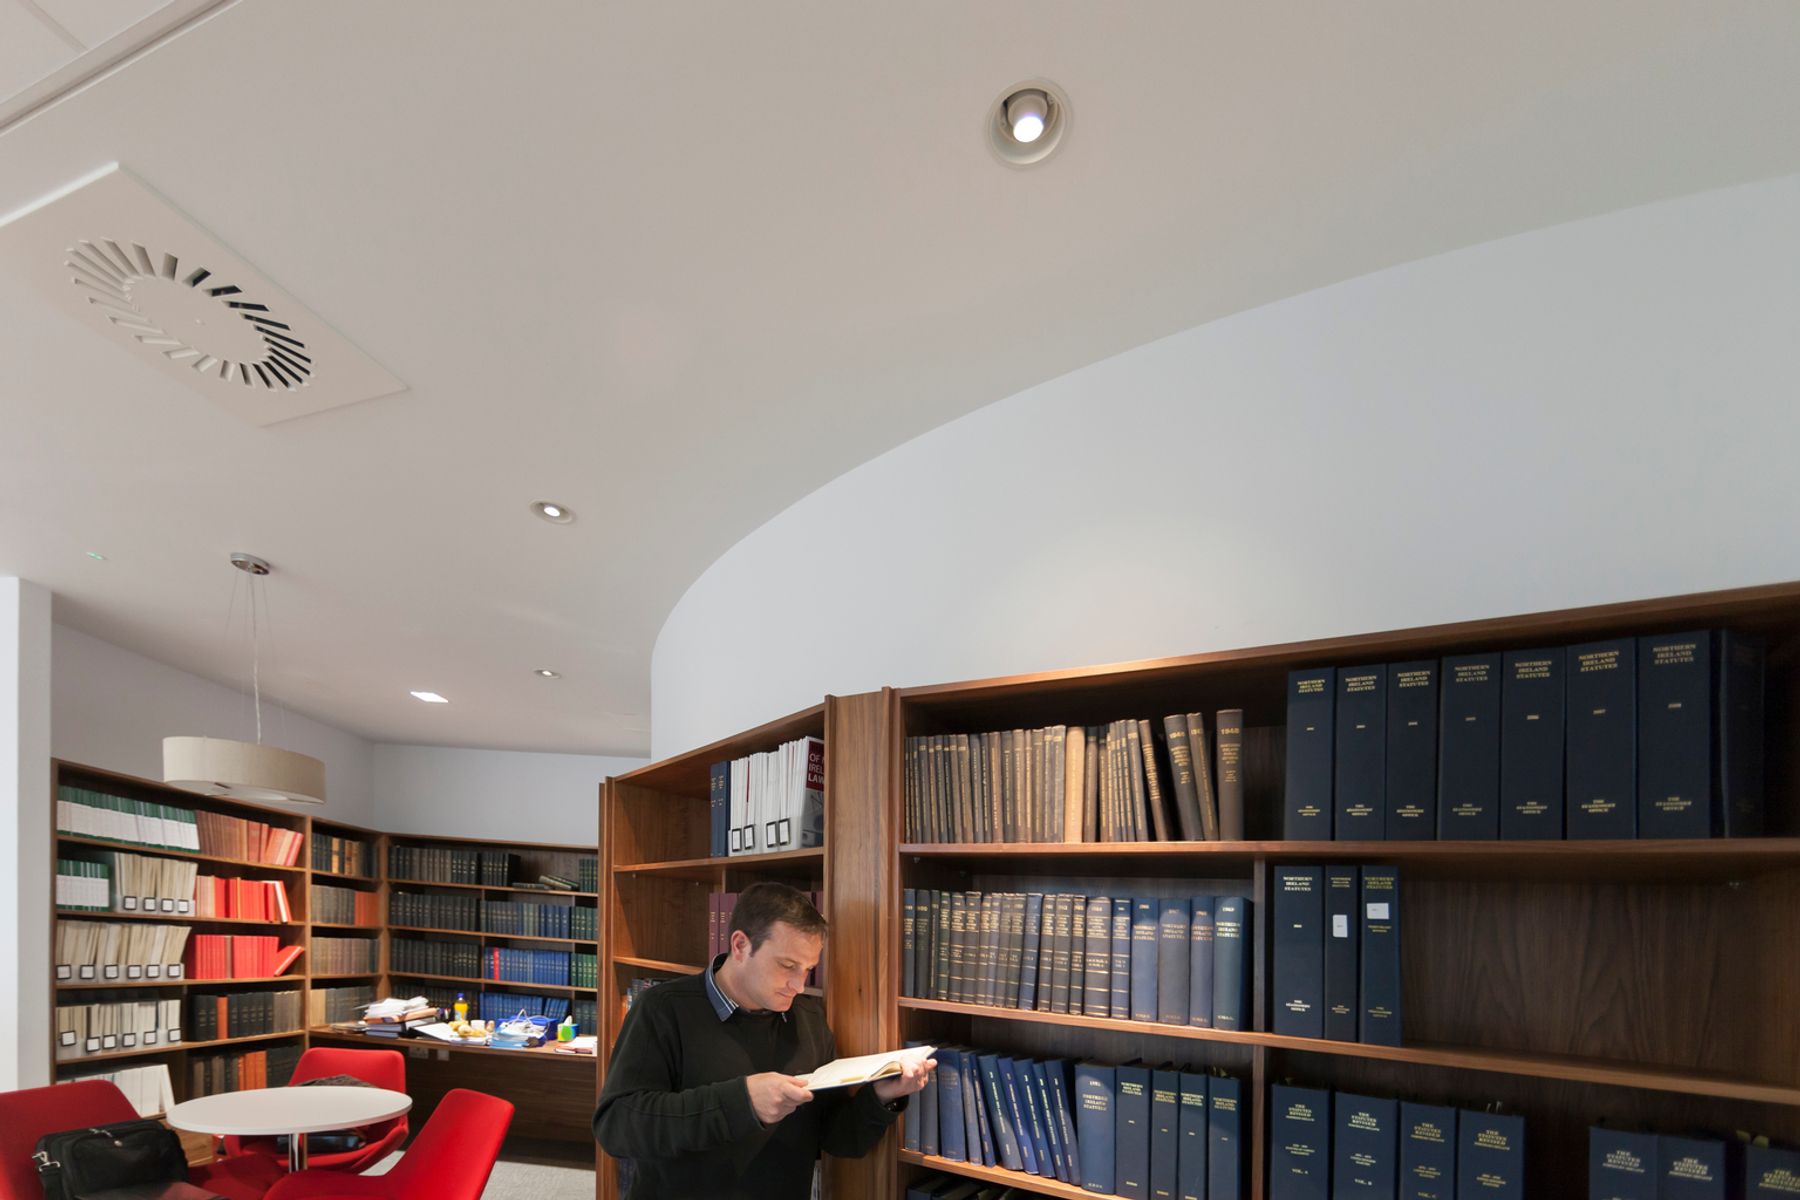 Studio legale Pinsent Masons, Belfast. Architettura: Niels Torp Architects, Oslo. Fotografia: Frieder Blickle, Amburgo.